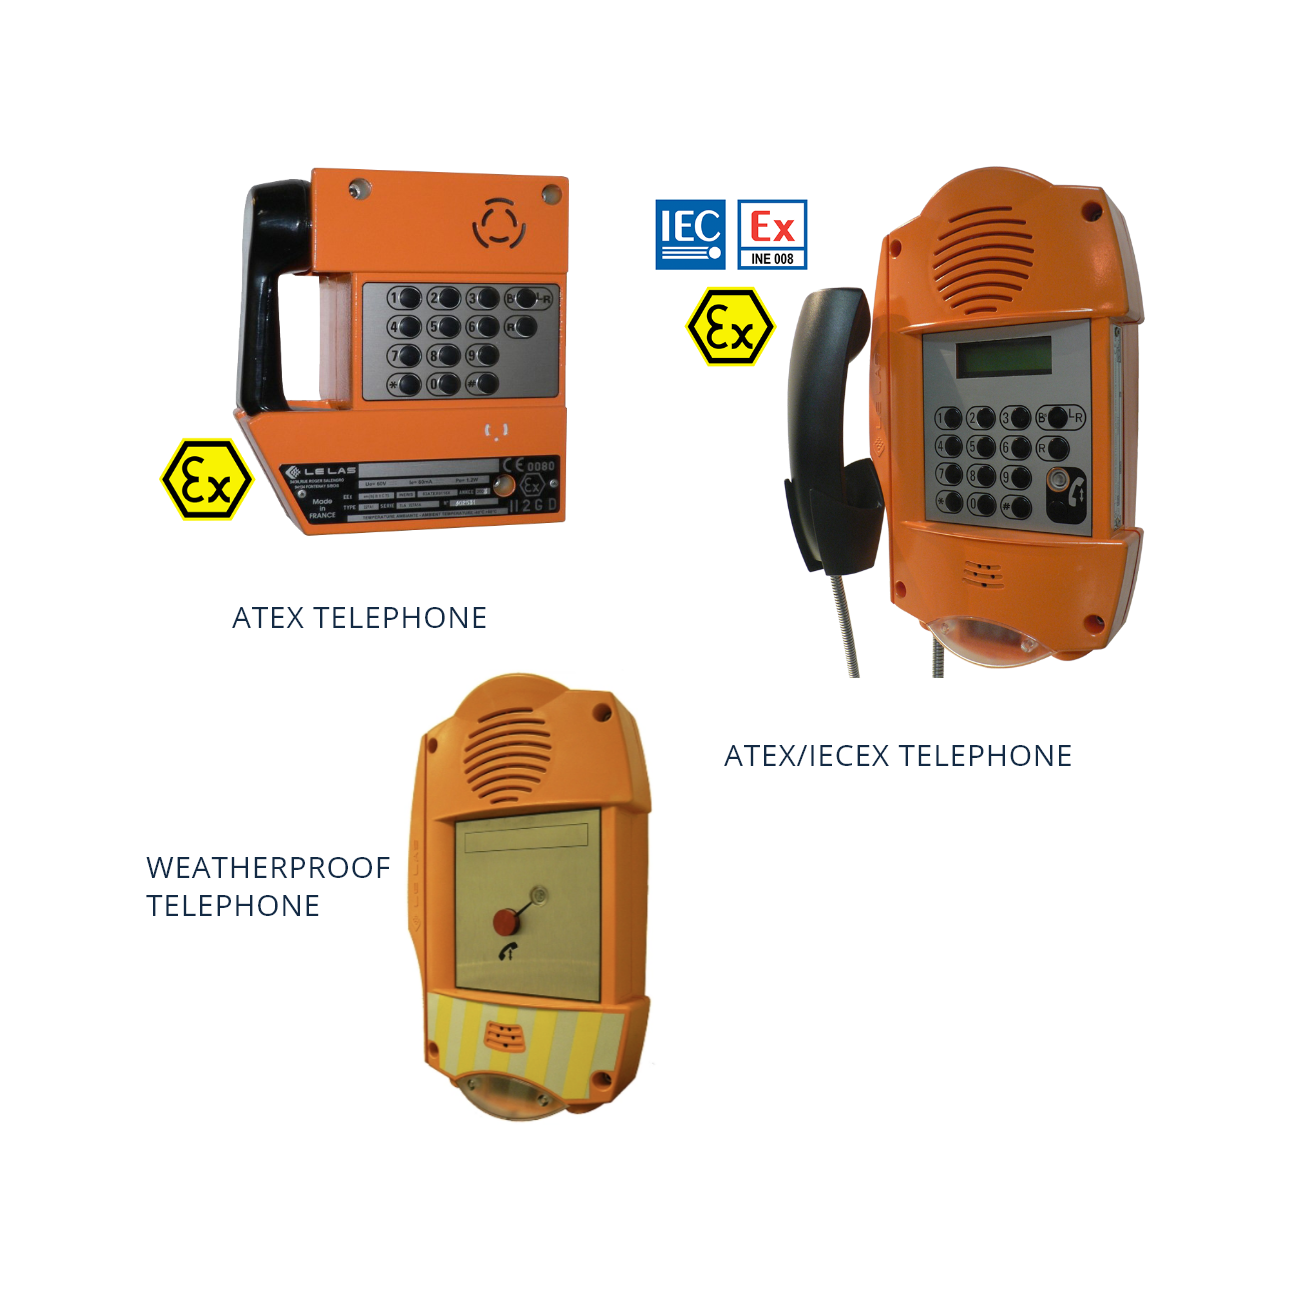 ATEX Telephones